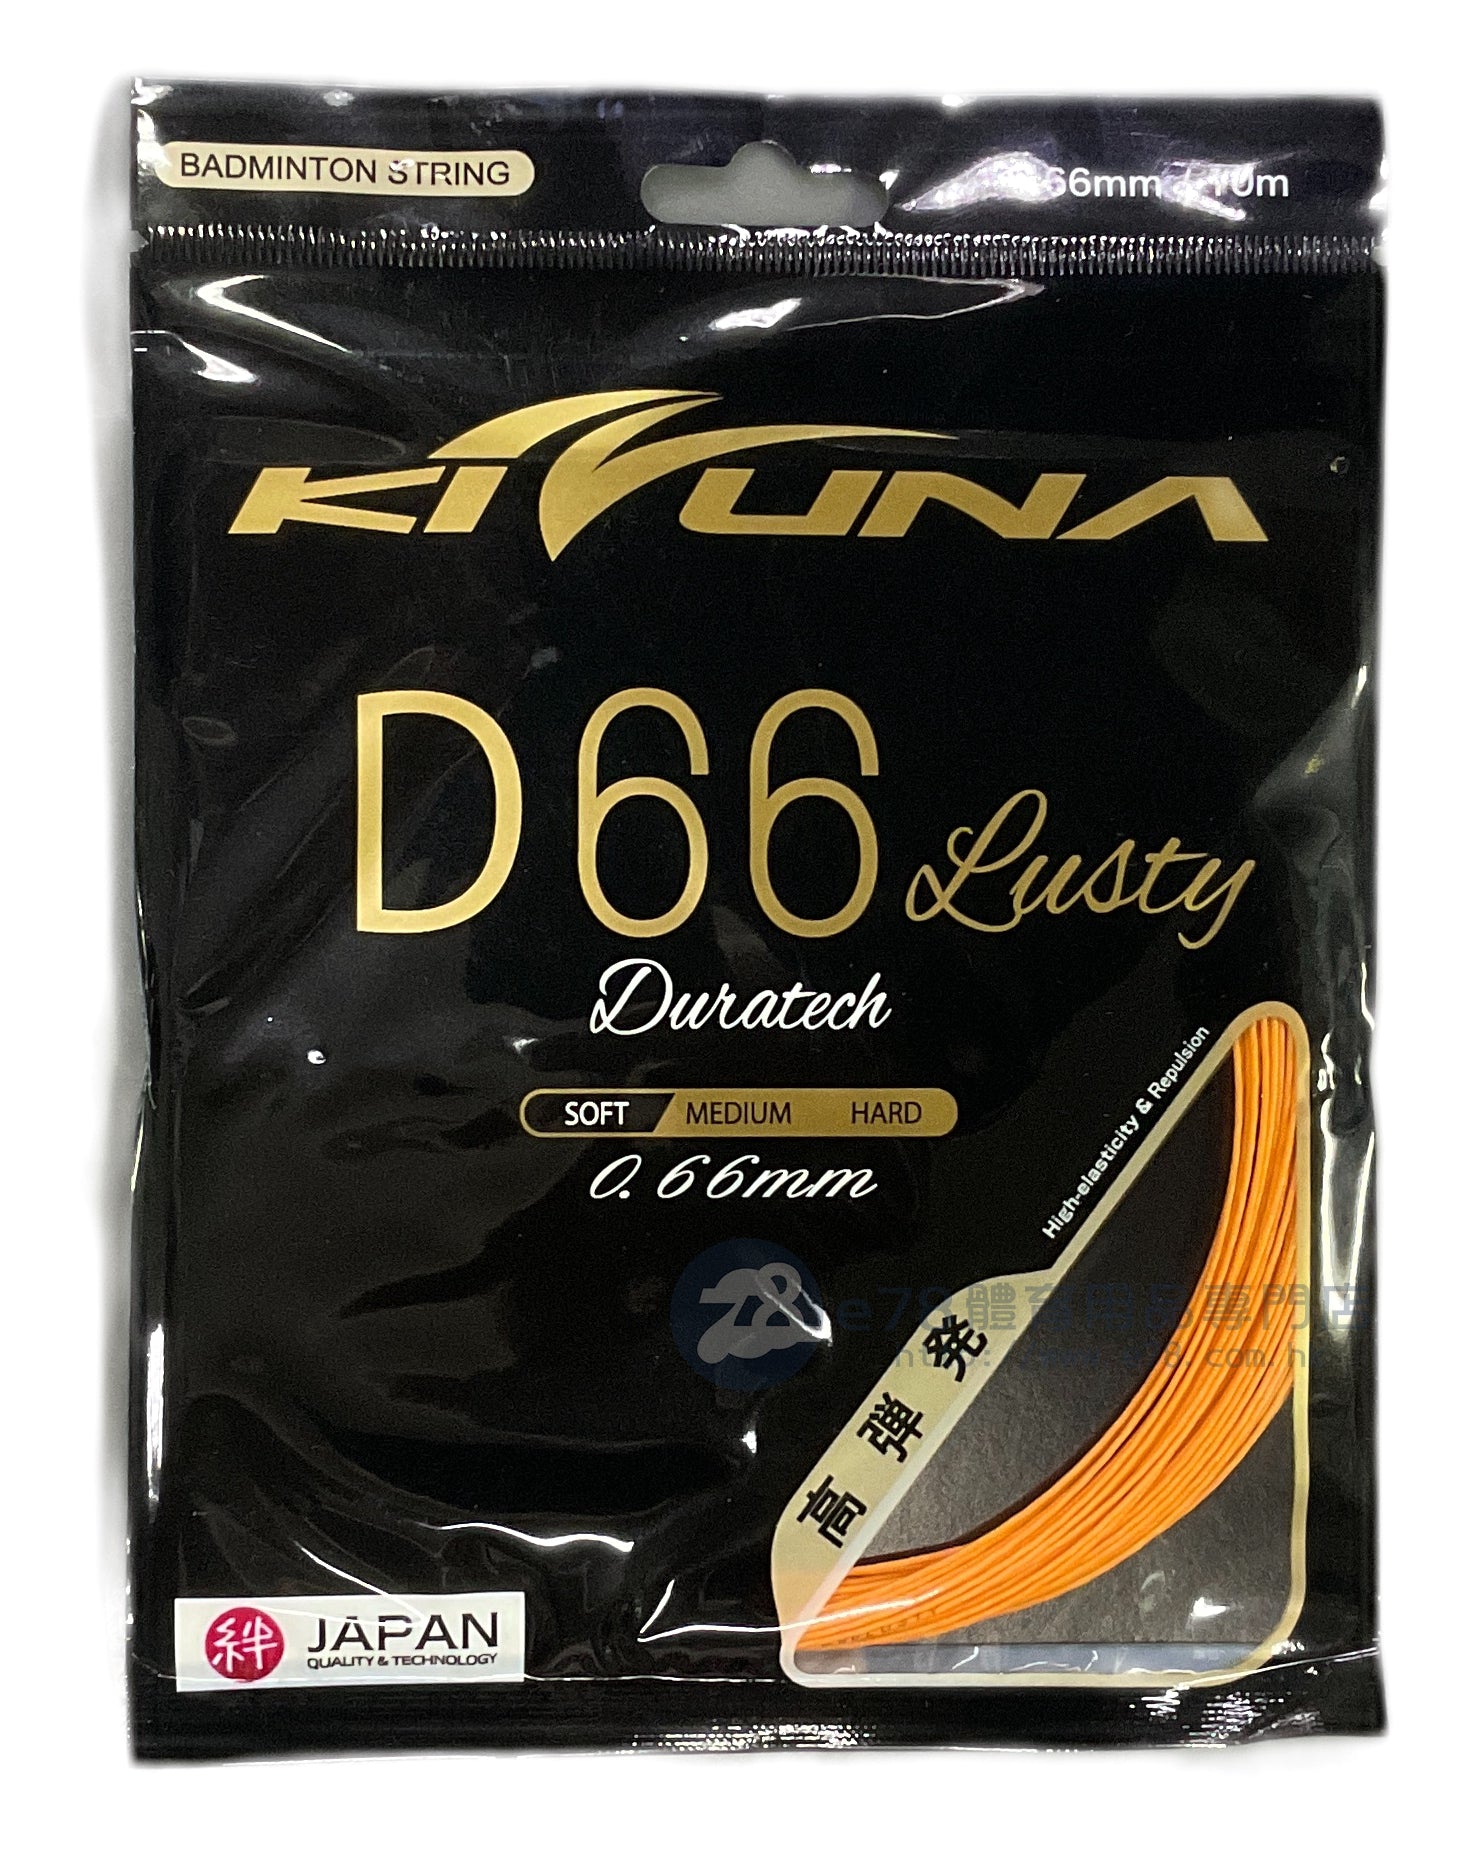 KIZUNA D66 LUSTY String - Orange